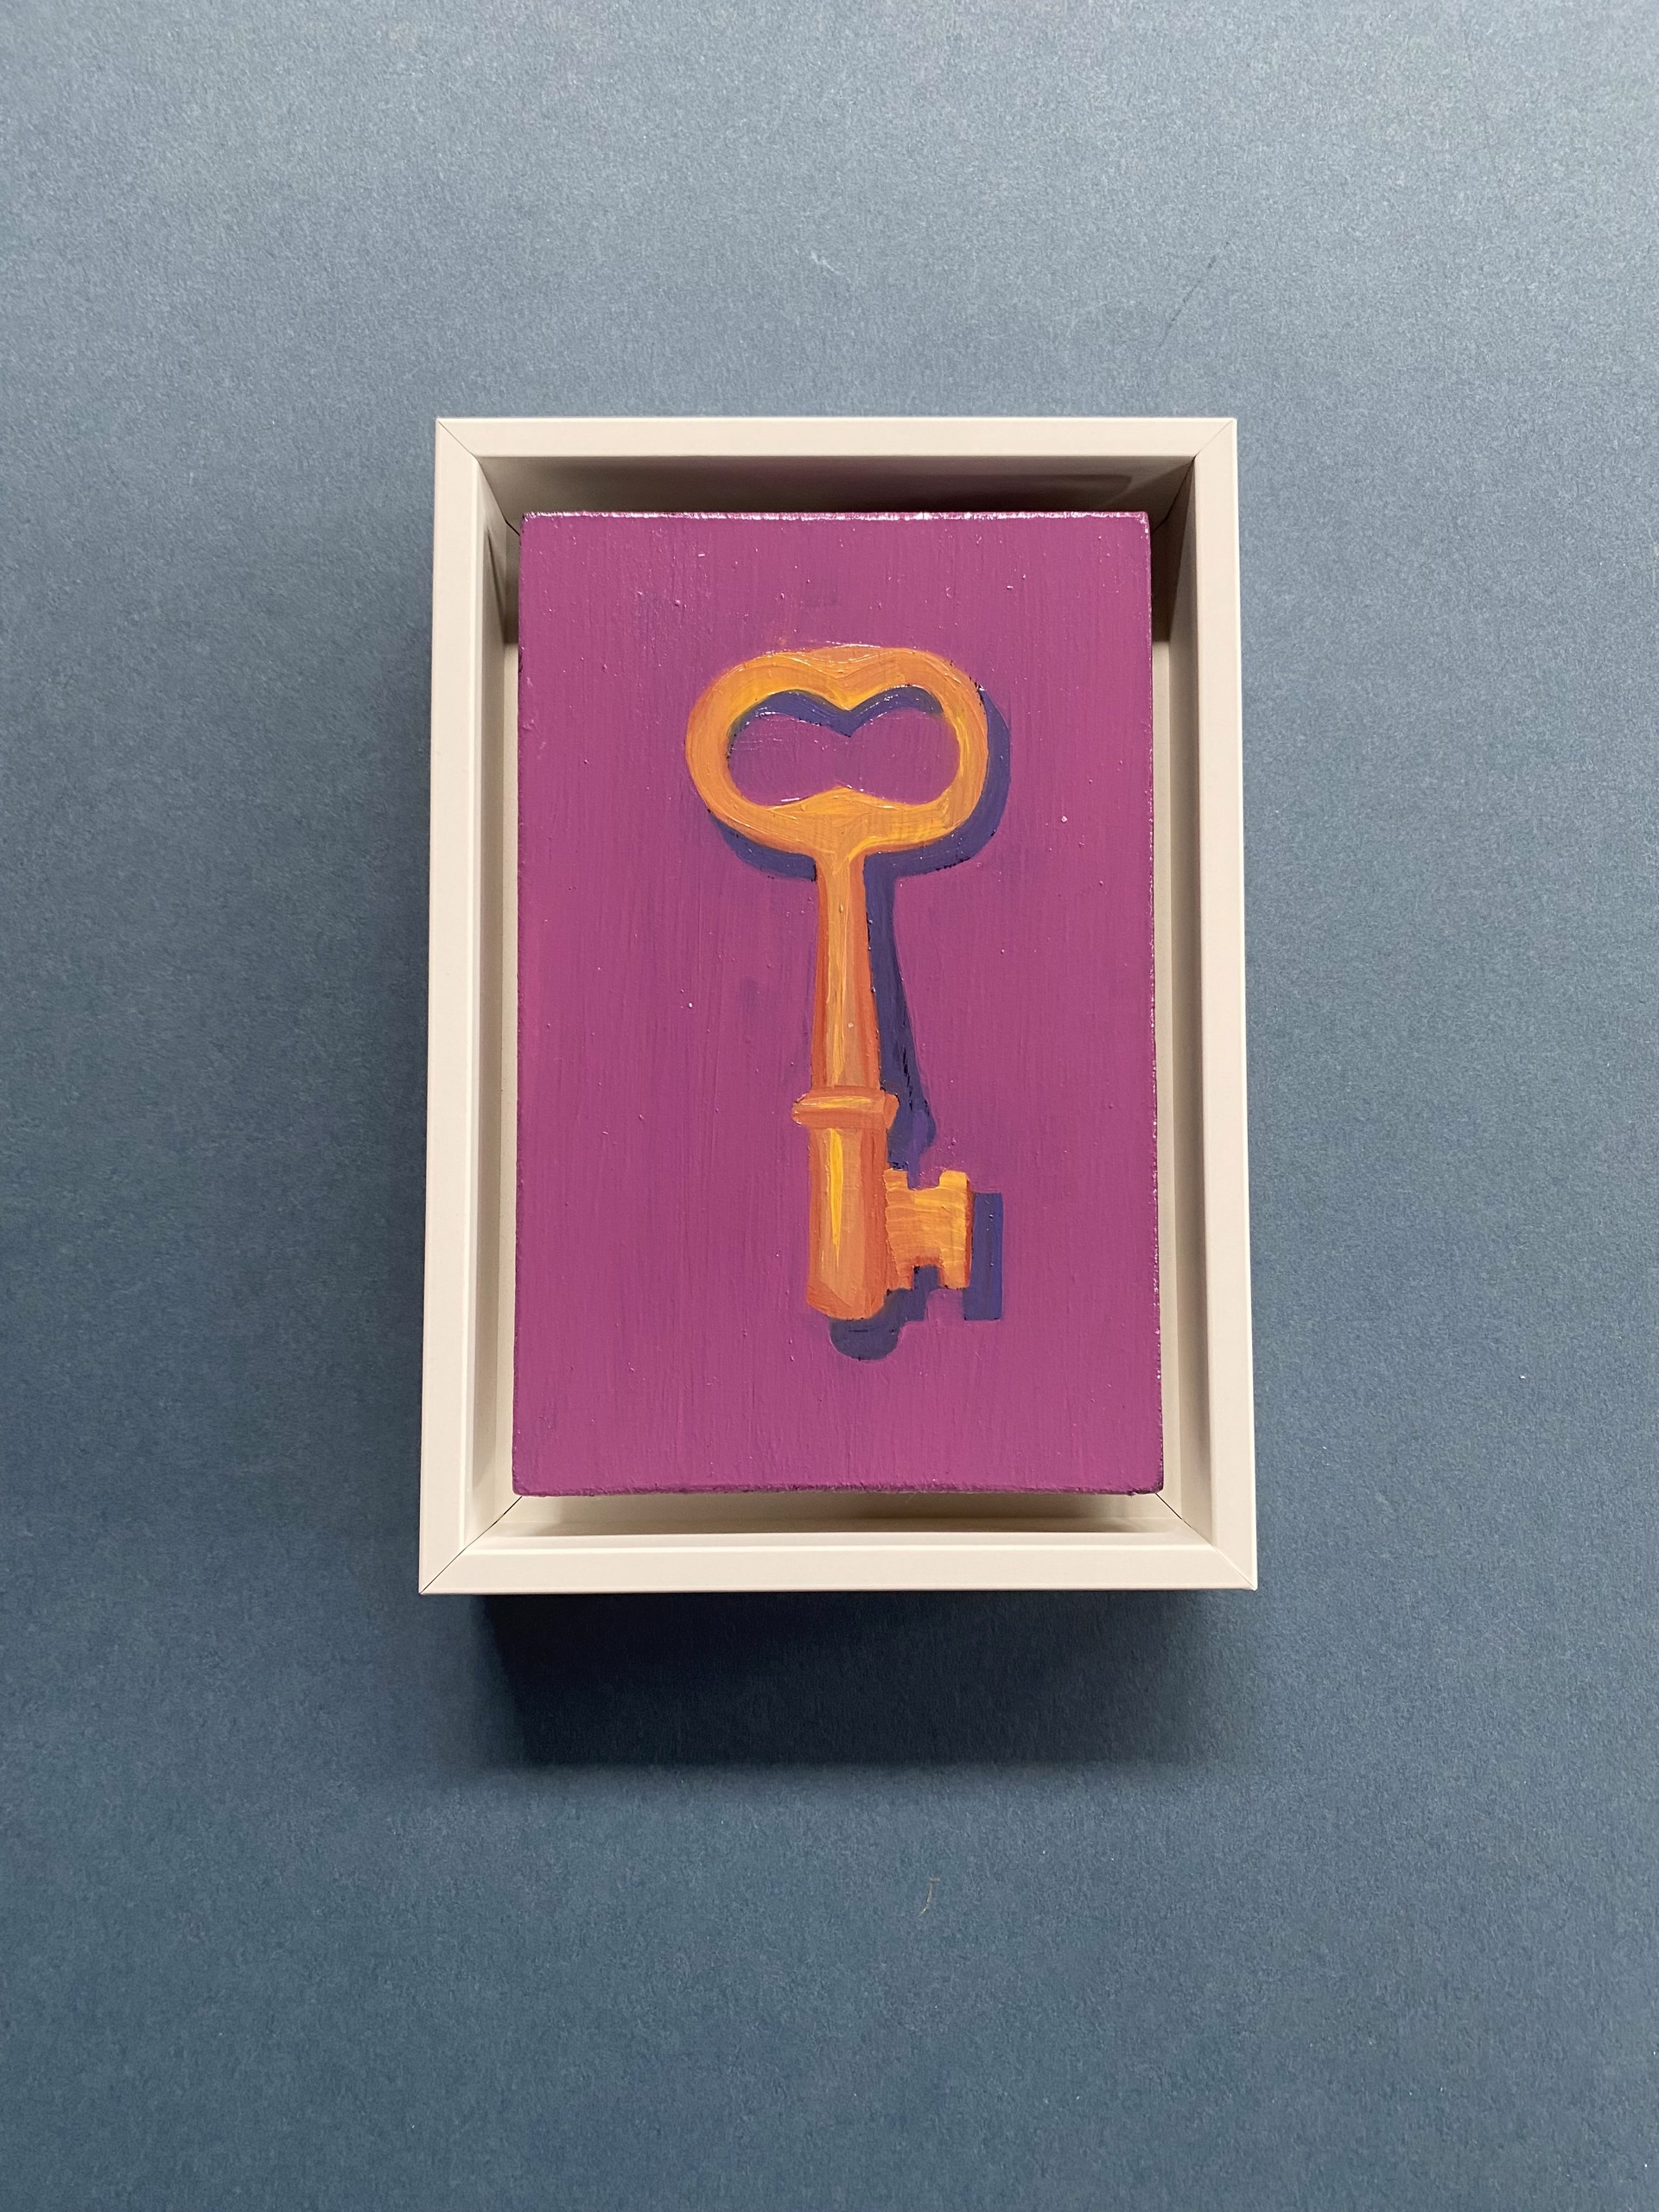 Key No. 48 by Stephen Wells